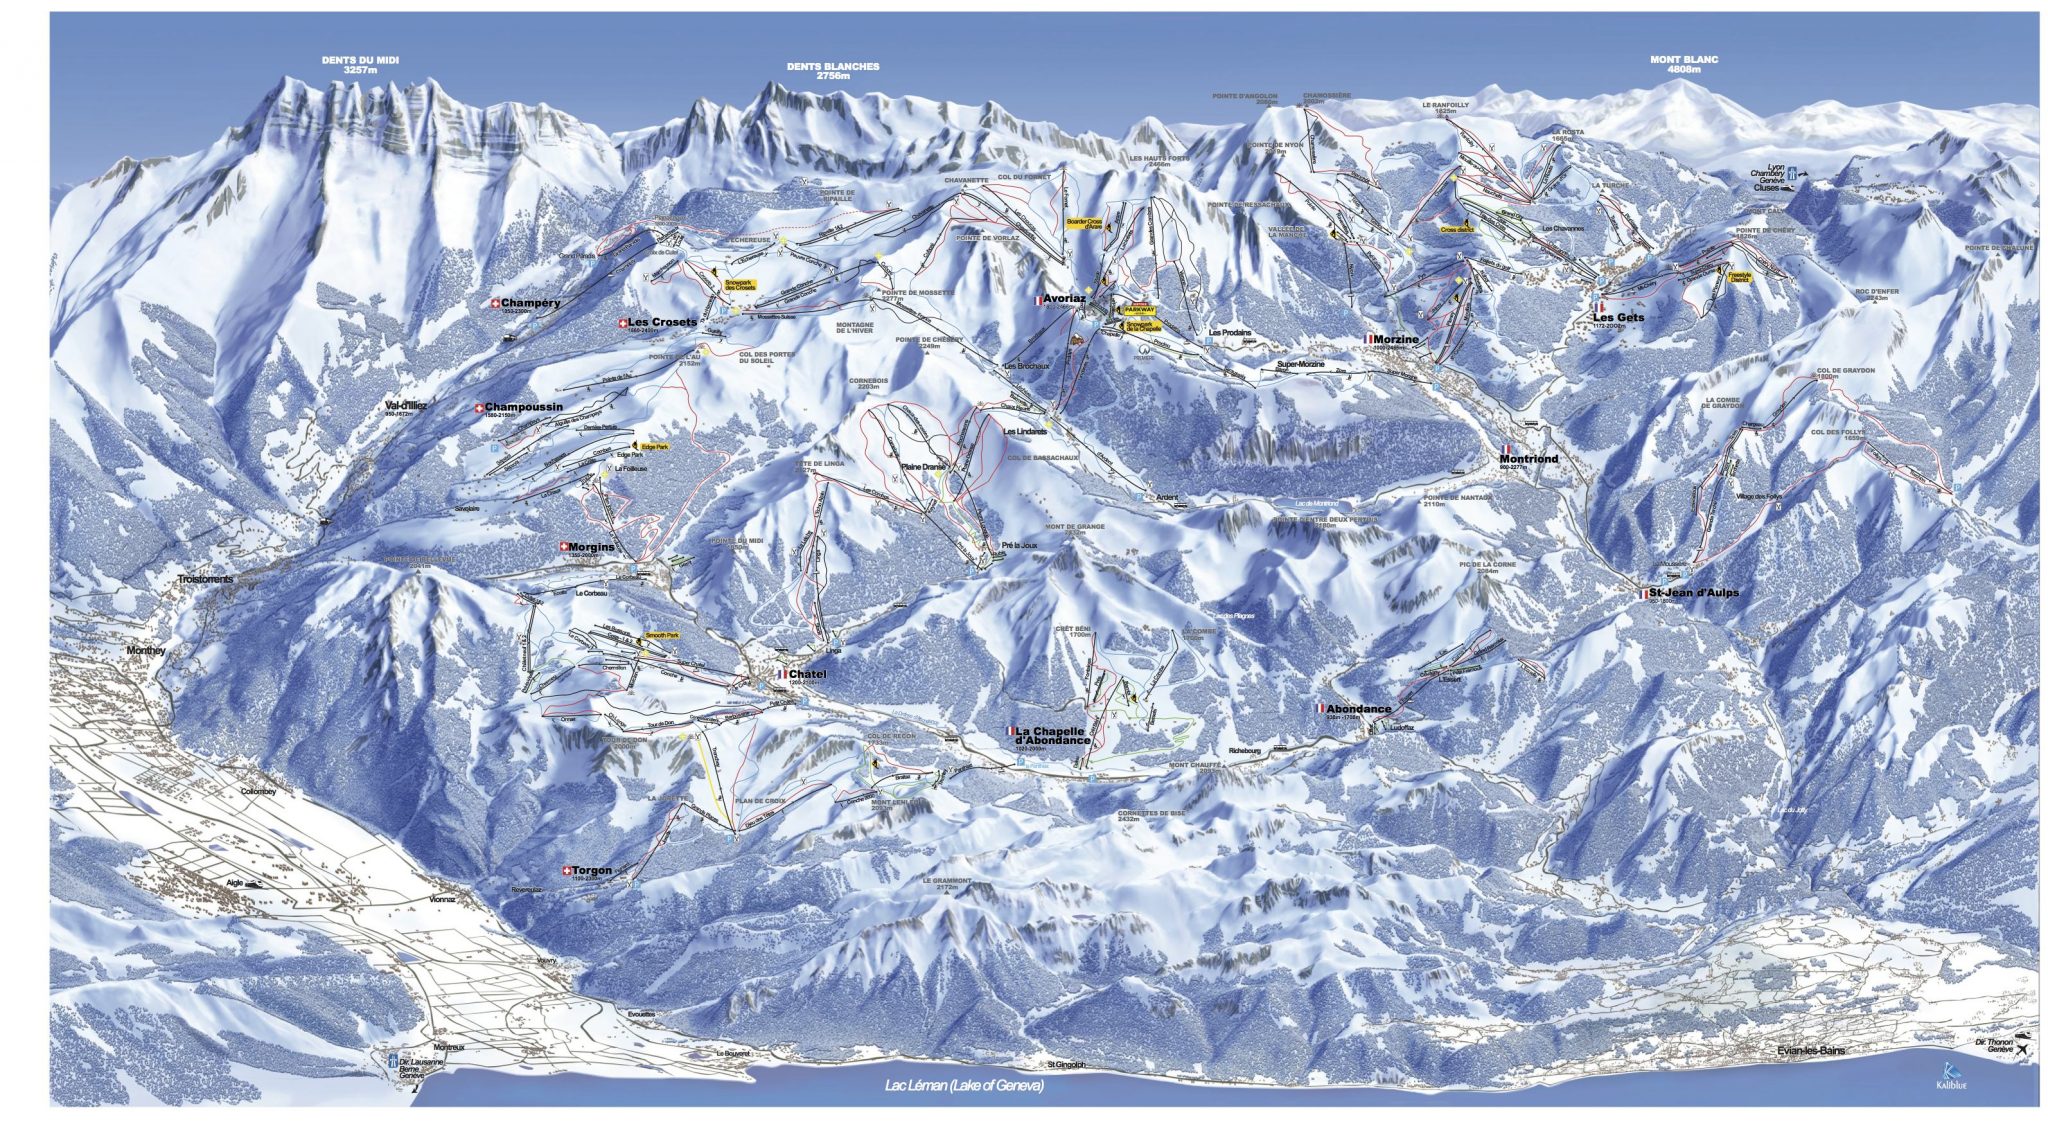 Swiss Ski Lift Company Facing Financial Issues, Seeks Donations